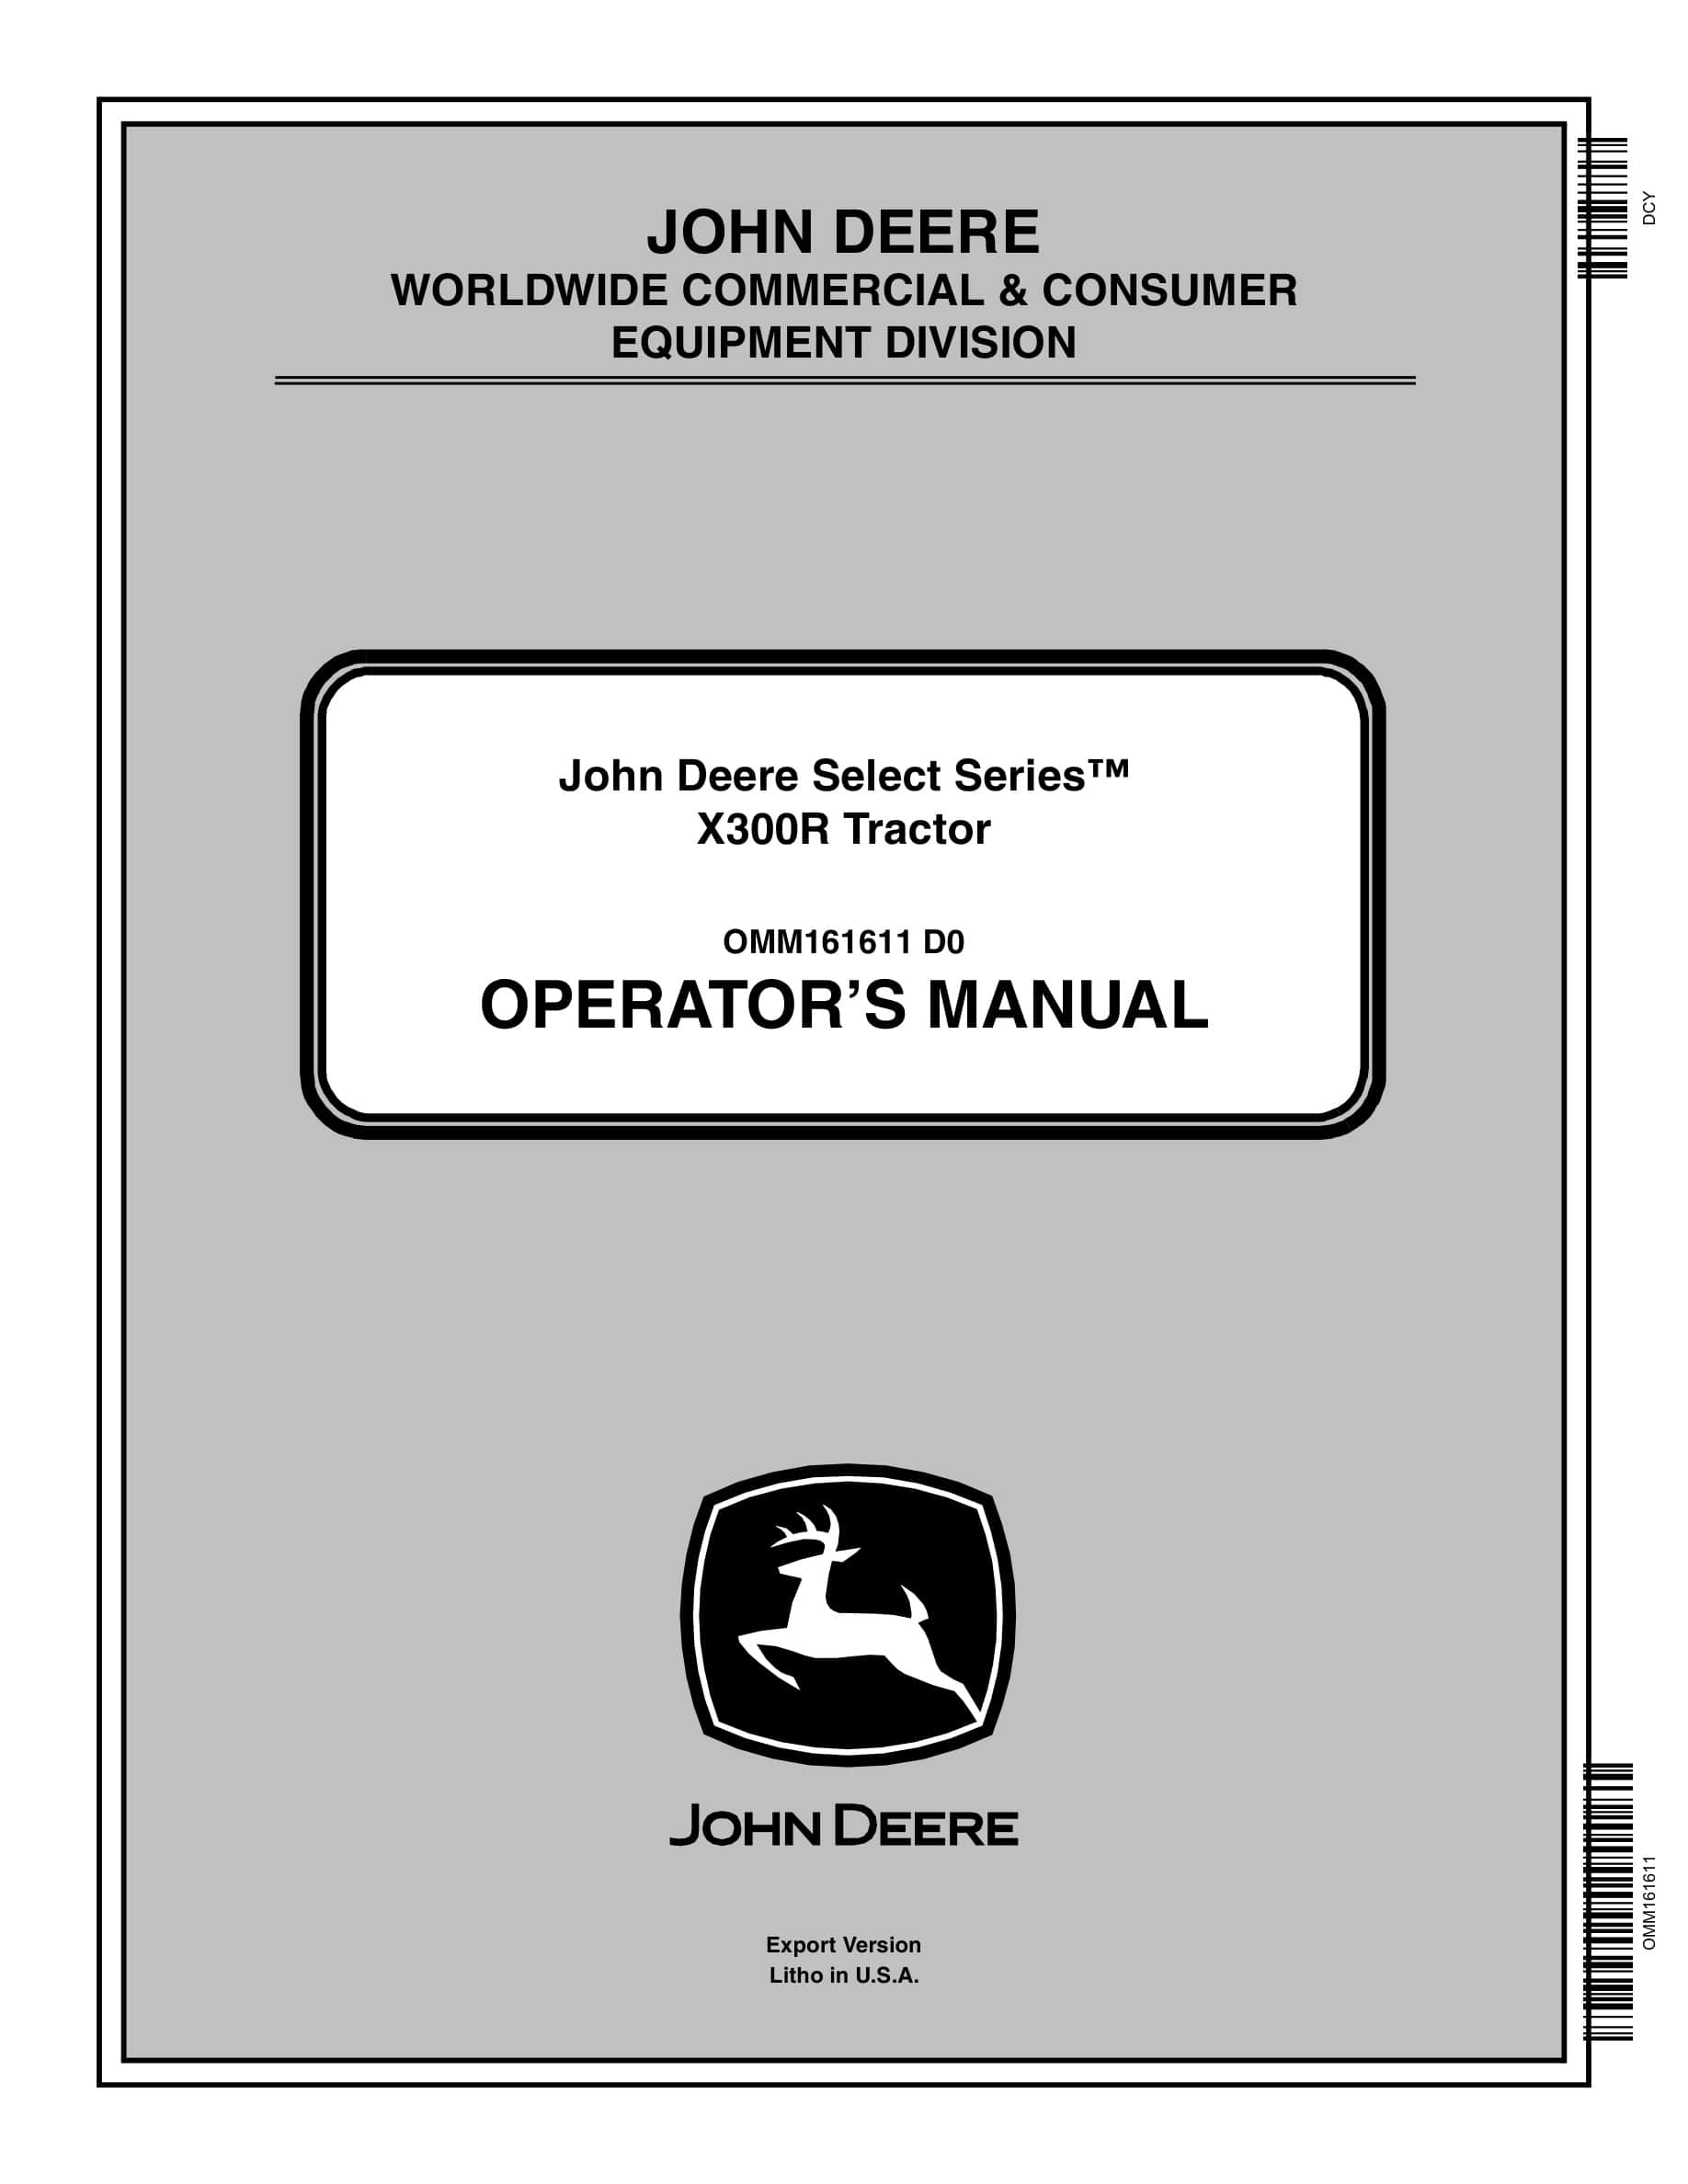 John Deere X300r Tractors Operator Manual OMM161611-1